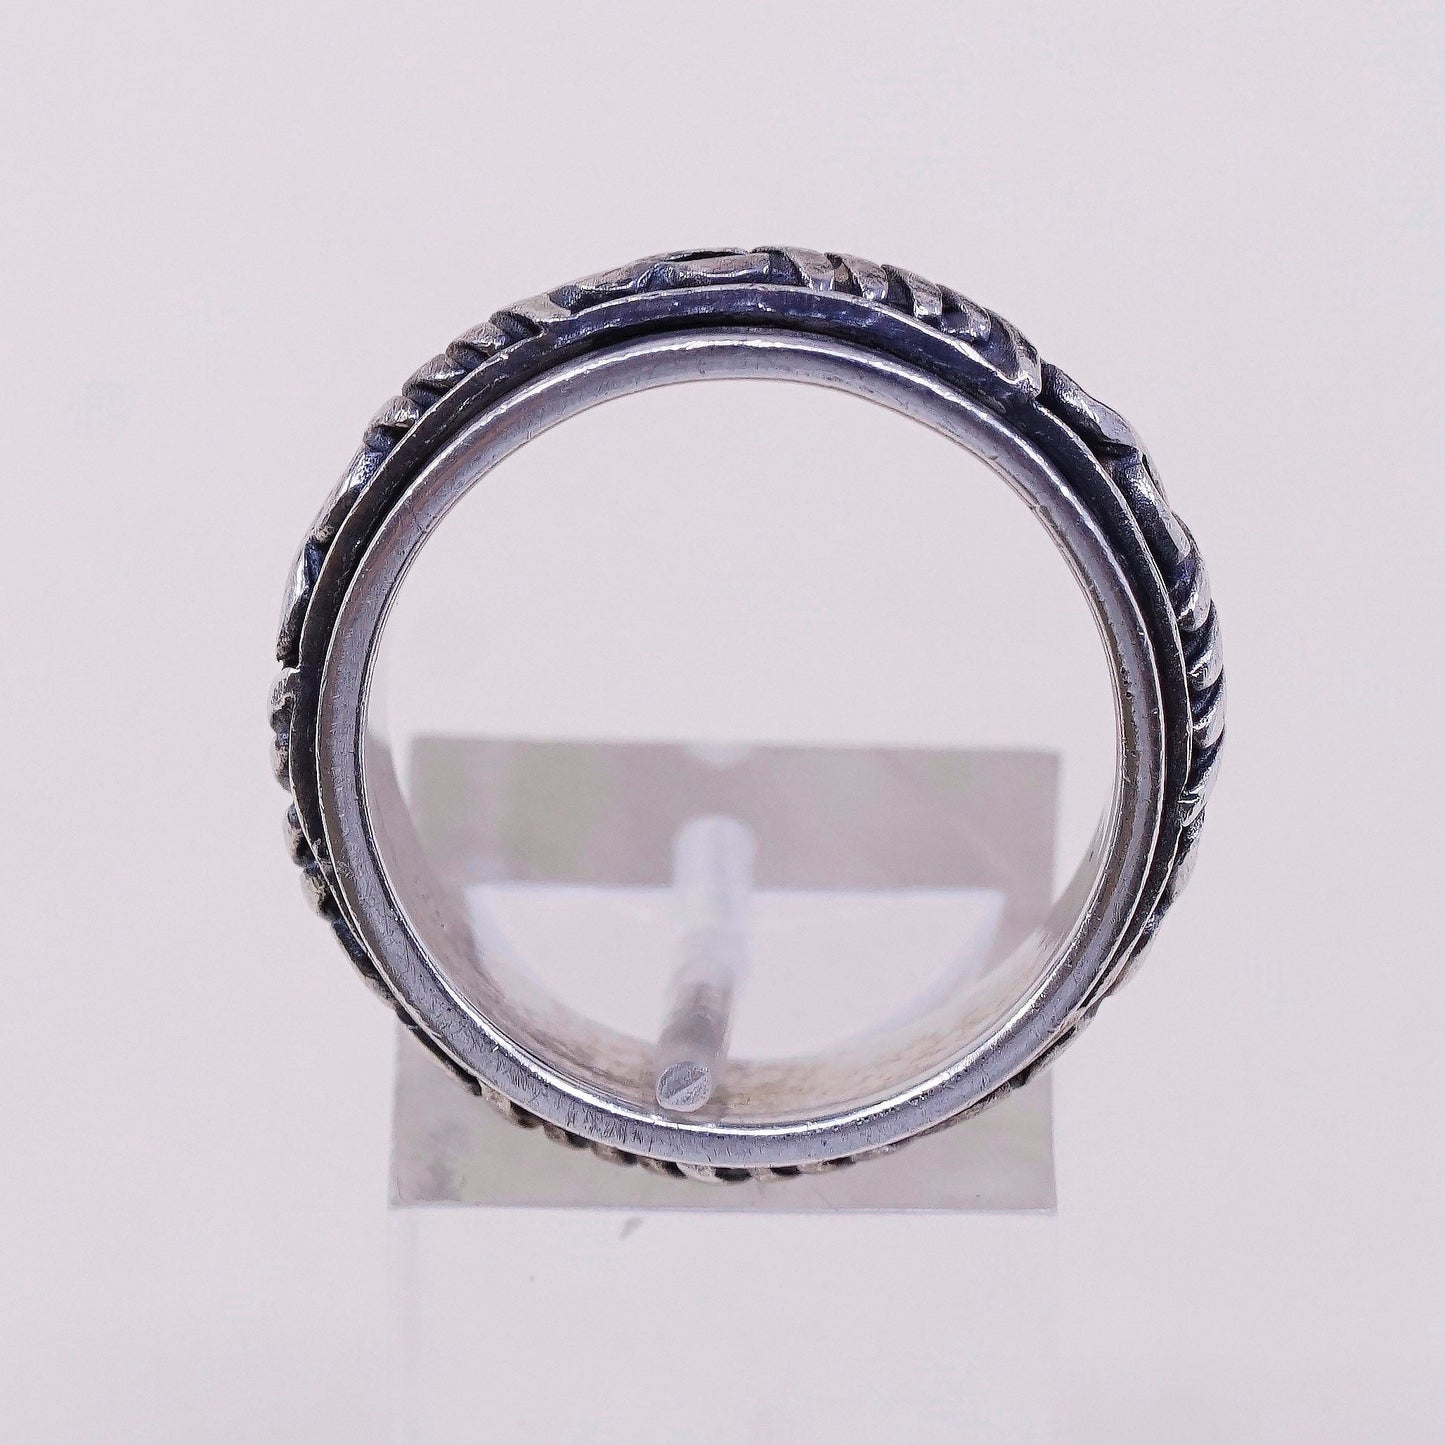 sz 10, vtg sterling silver handmade ring, 925 spinner roller band w/ cable